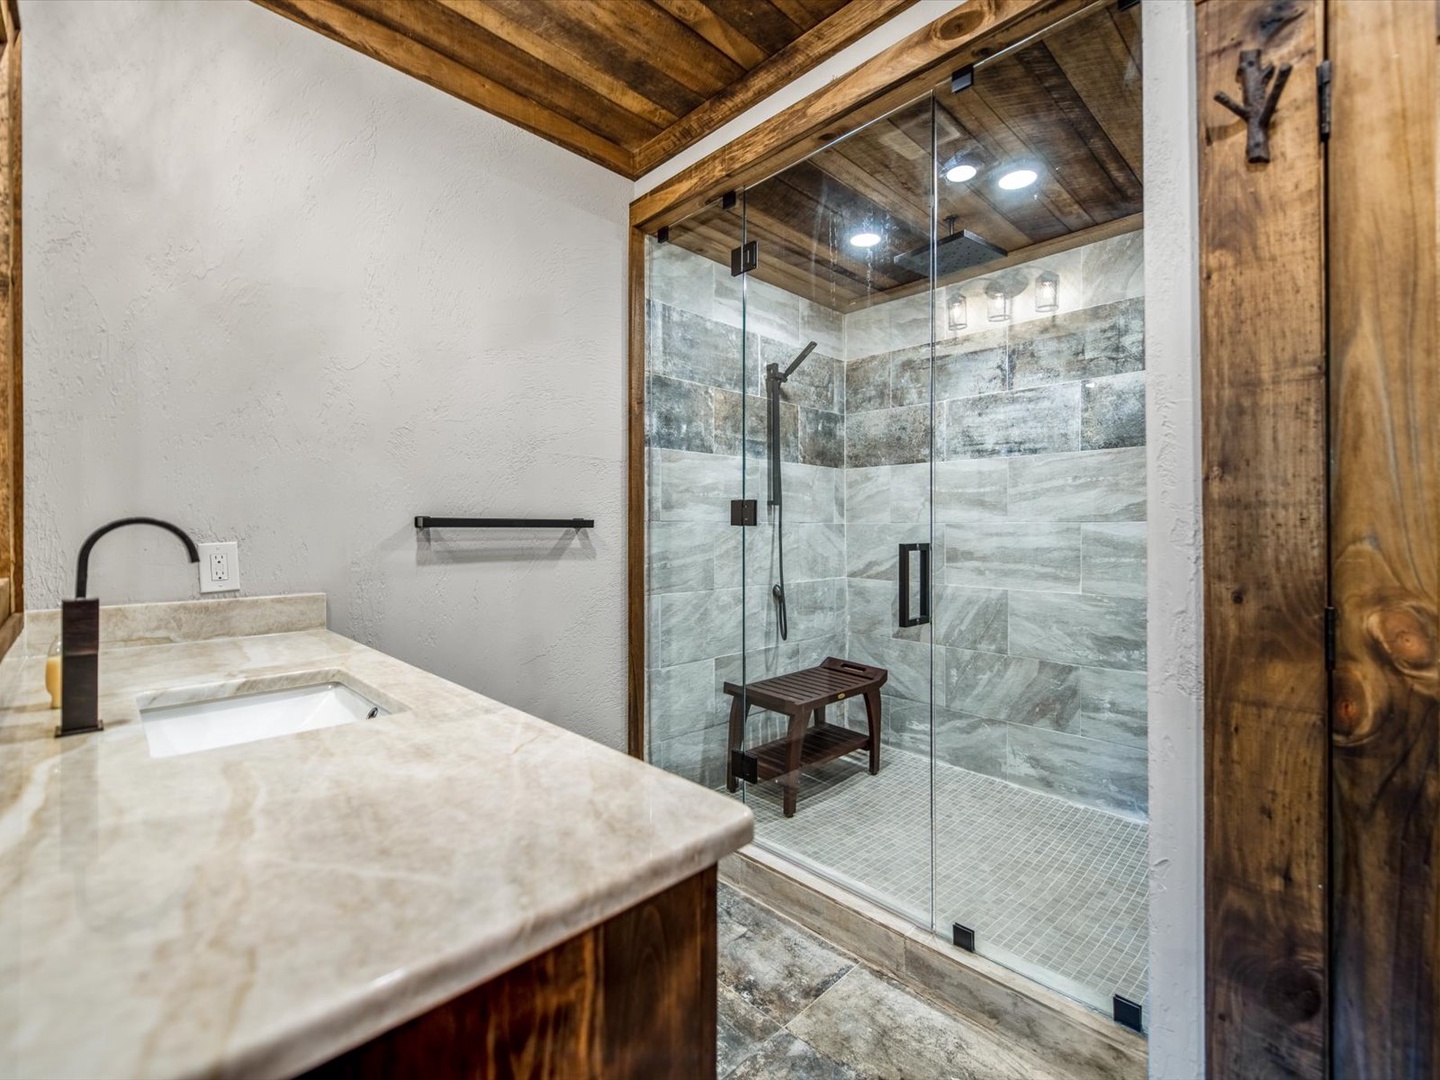 Misty Trail Lakehouse- Entry level master bathroom